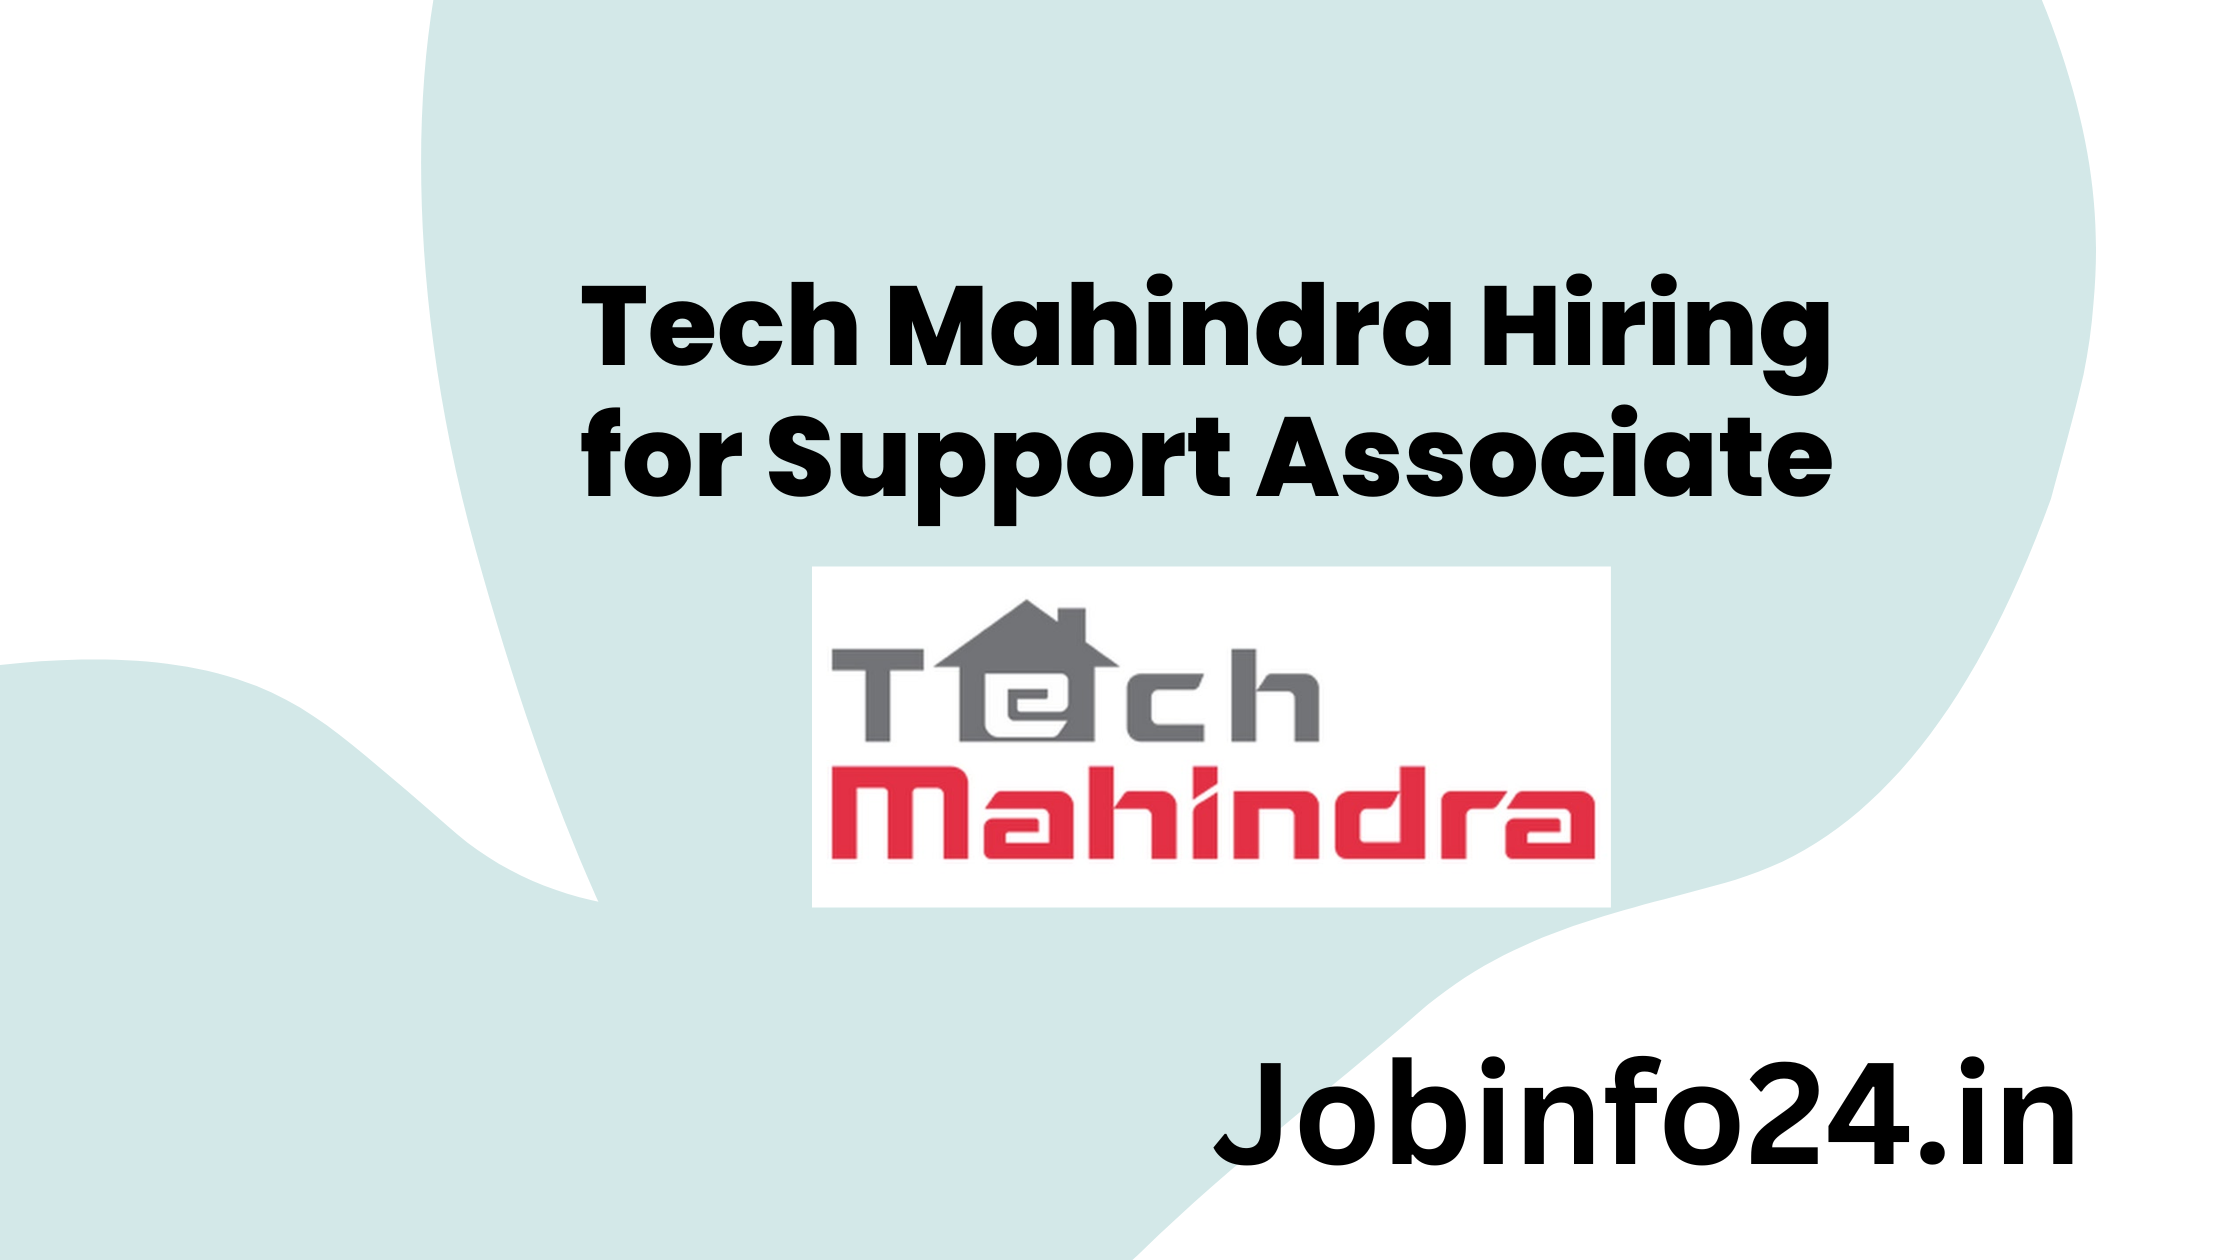 Tech Mahindra Hiring for Support Associate